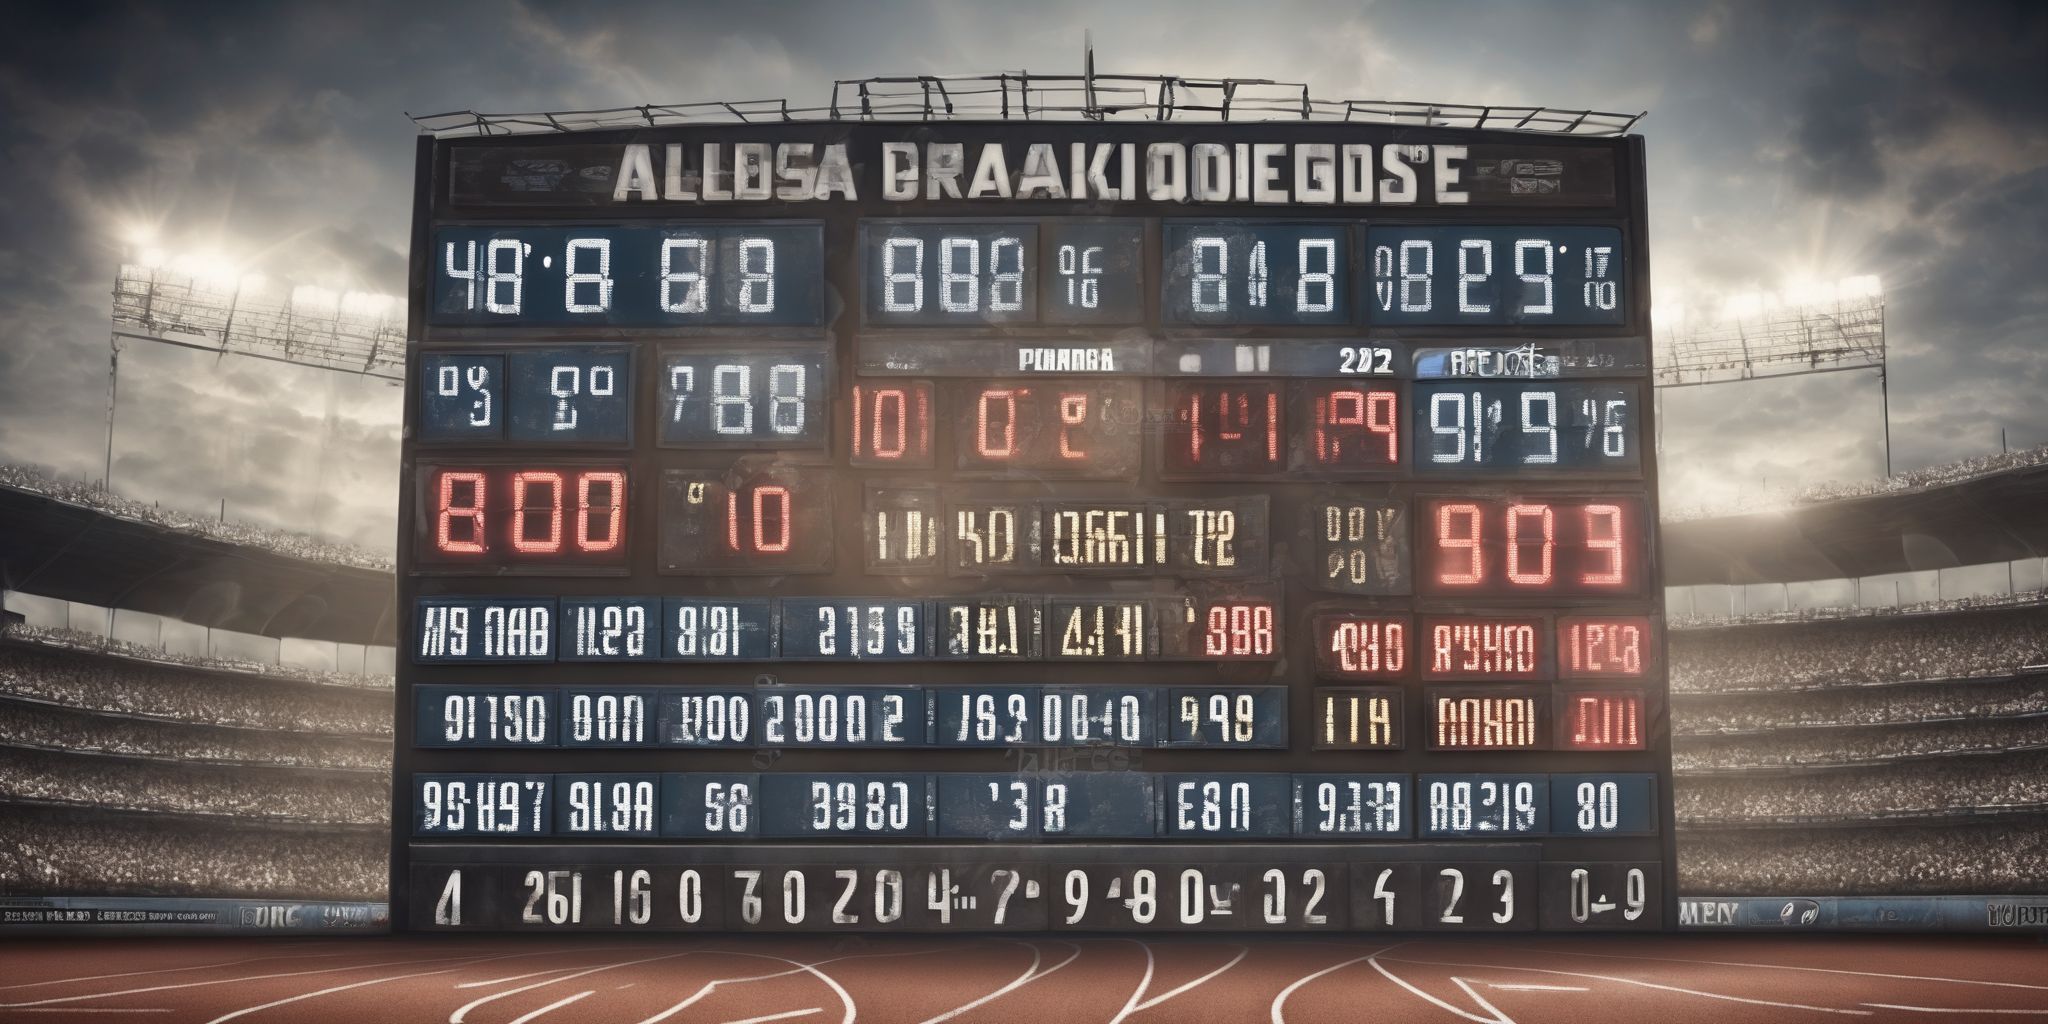 Scoreboard  in realistic, photographic style